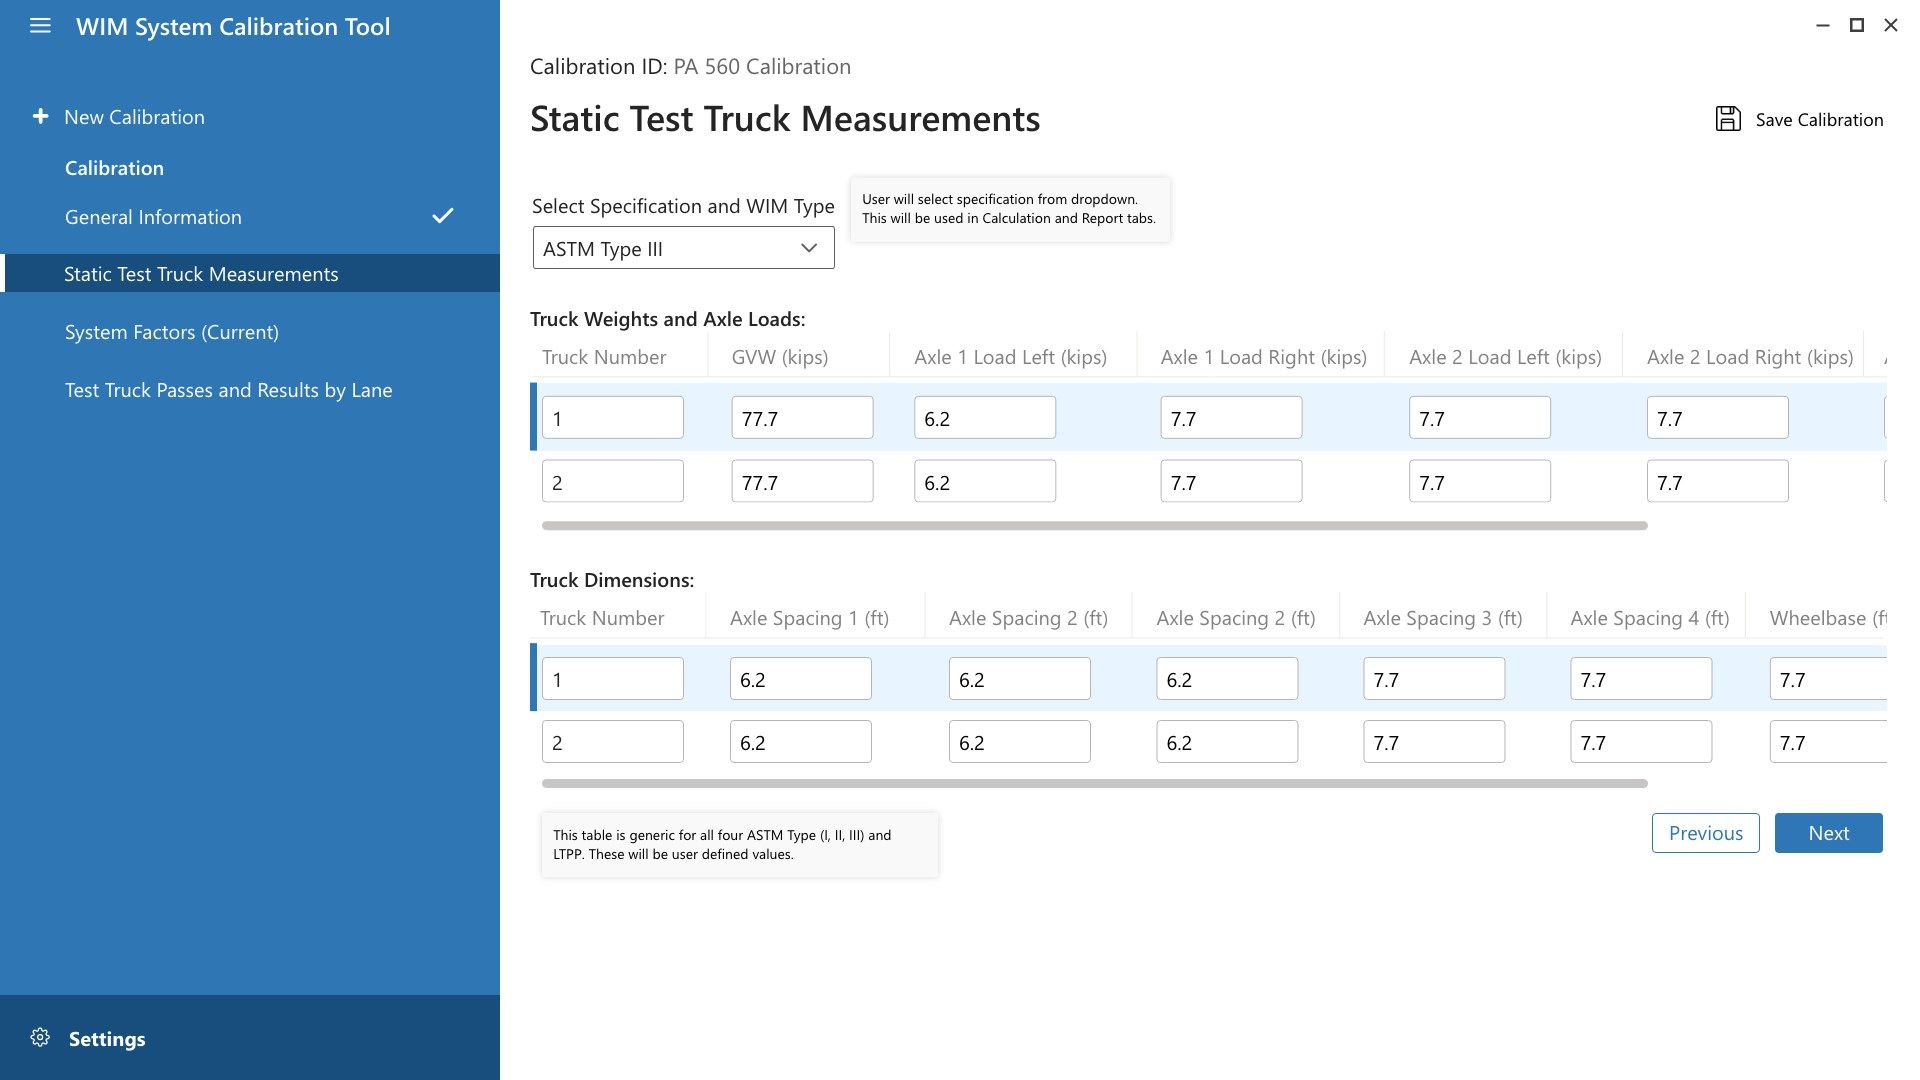 Statistic Test Truck Measurements